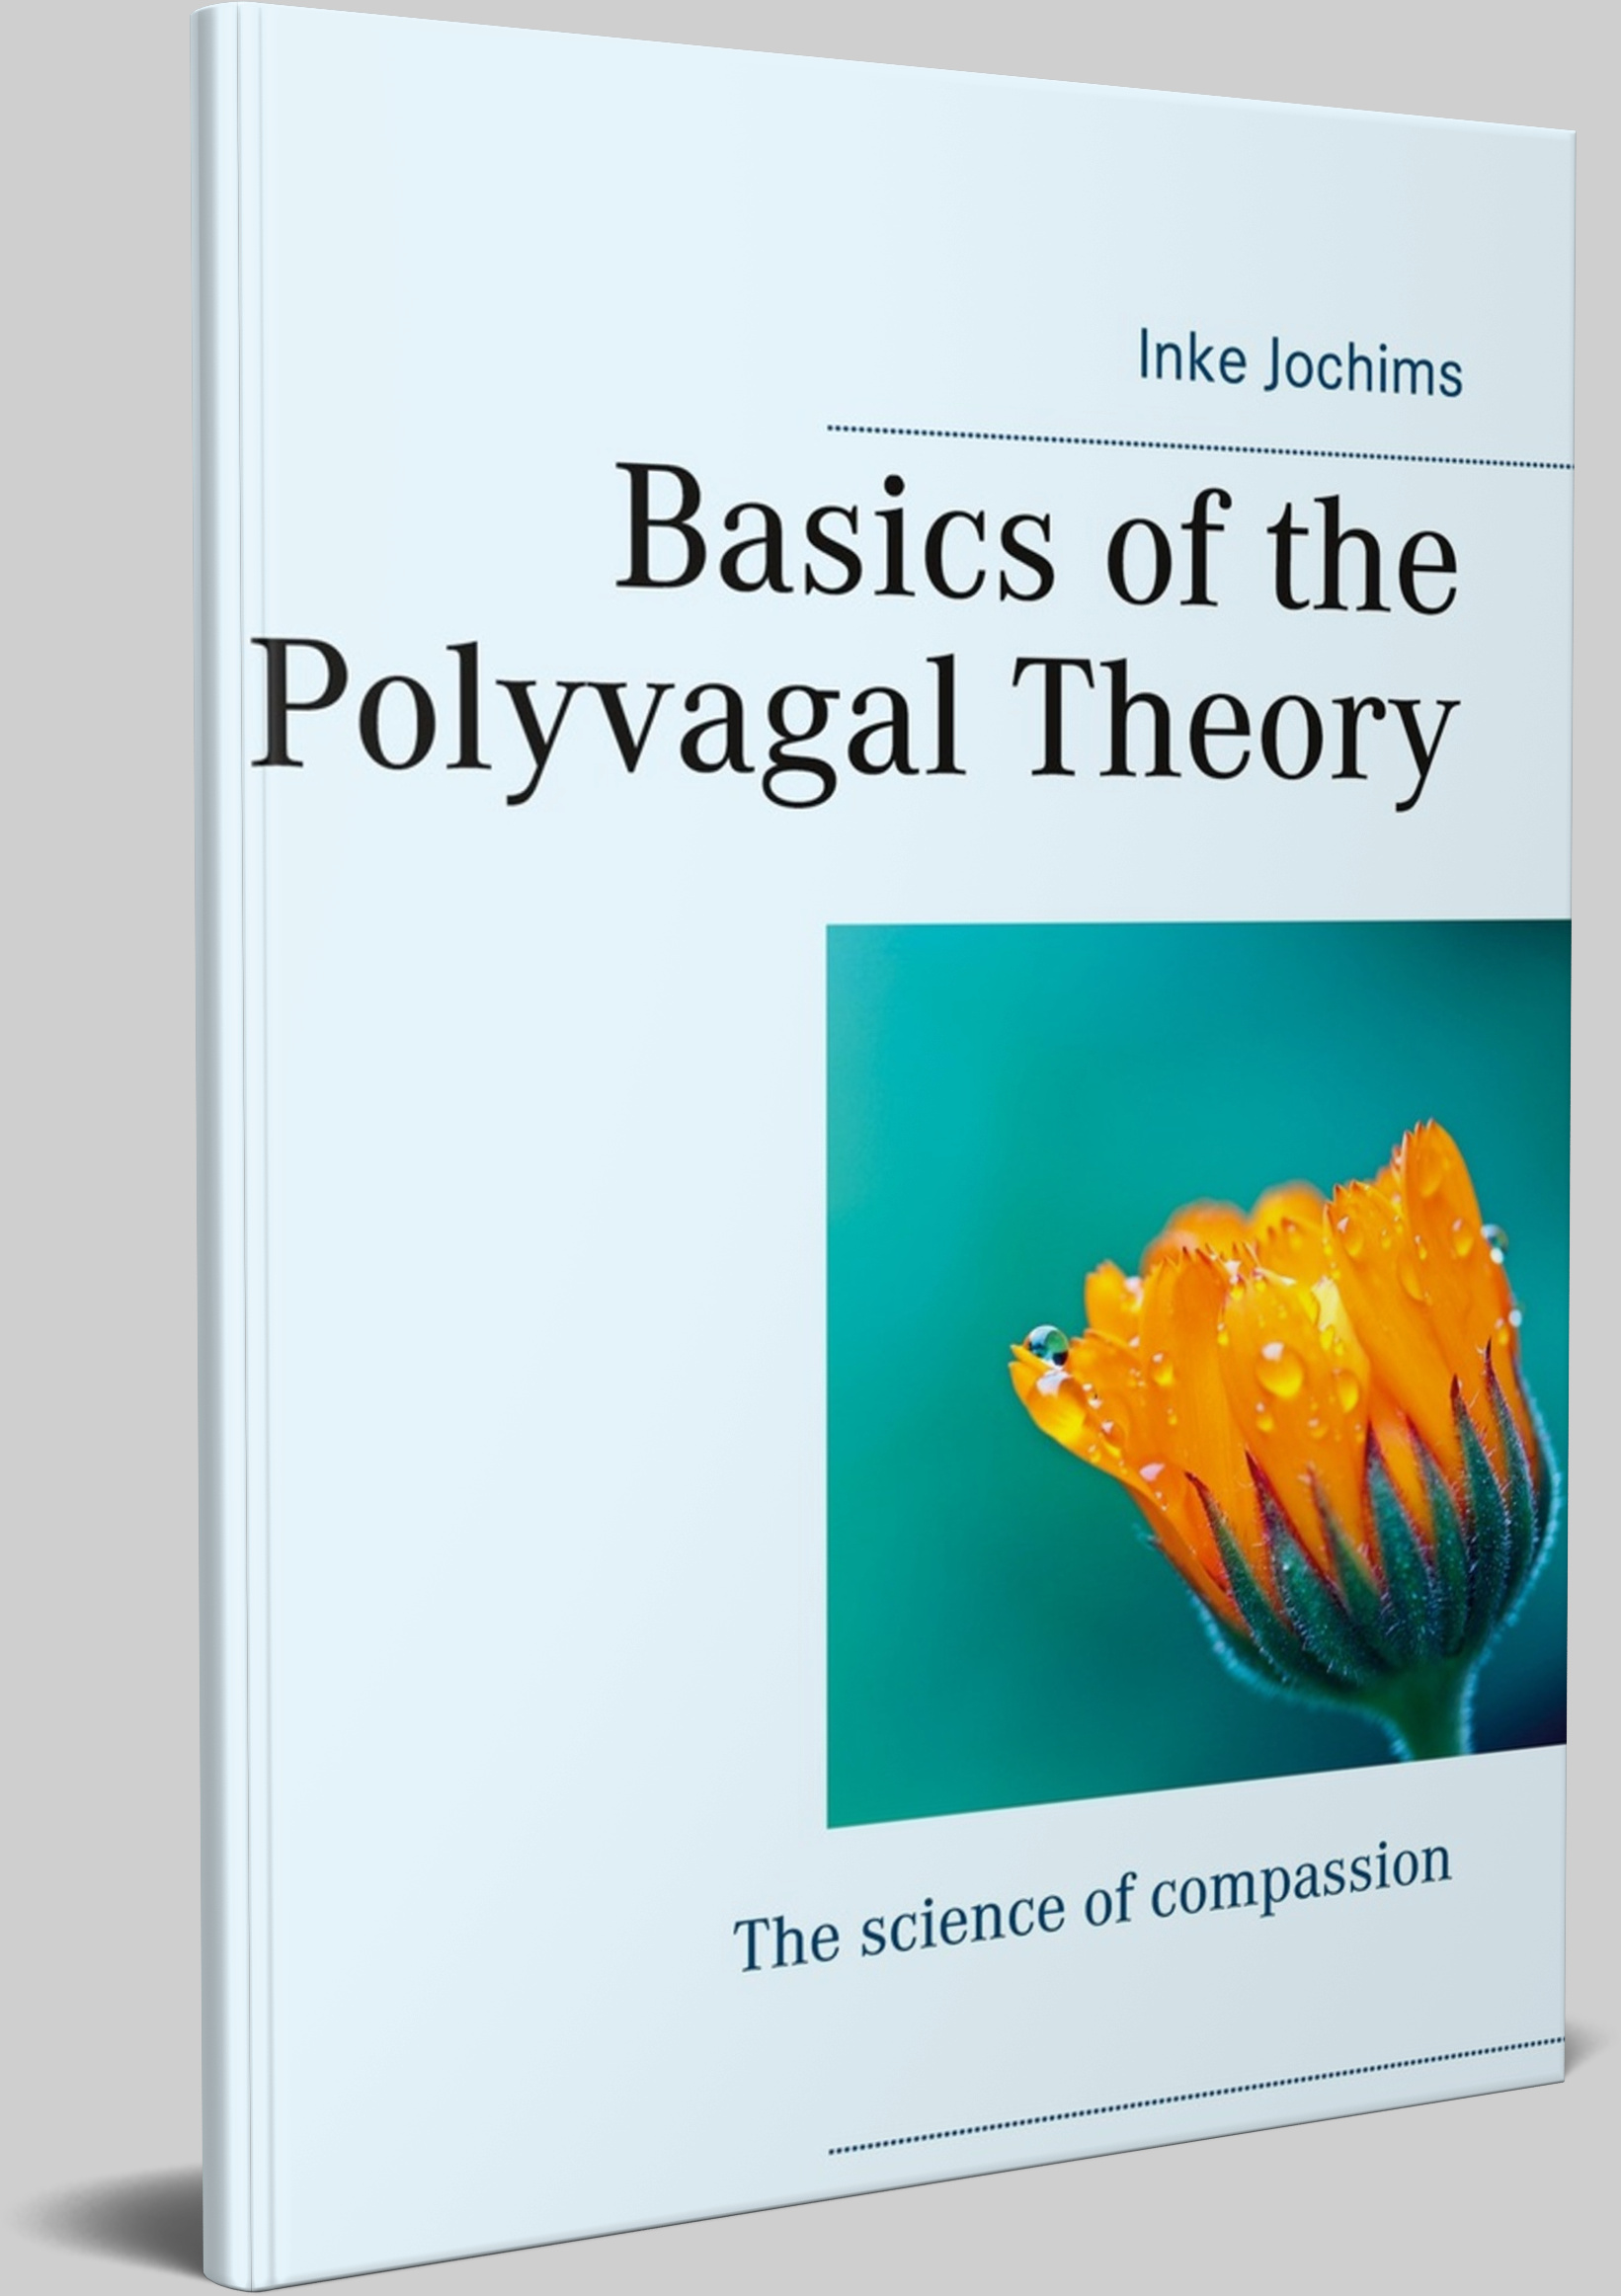 Basics of the Polyvagal Theory